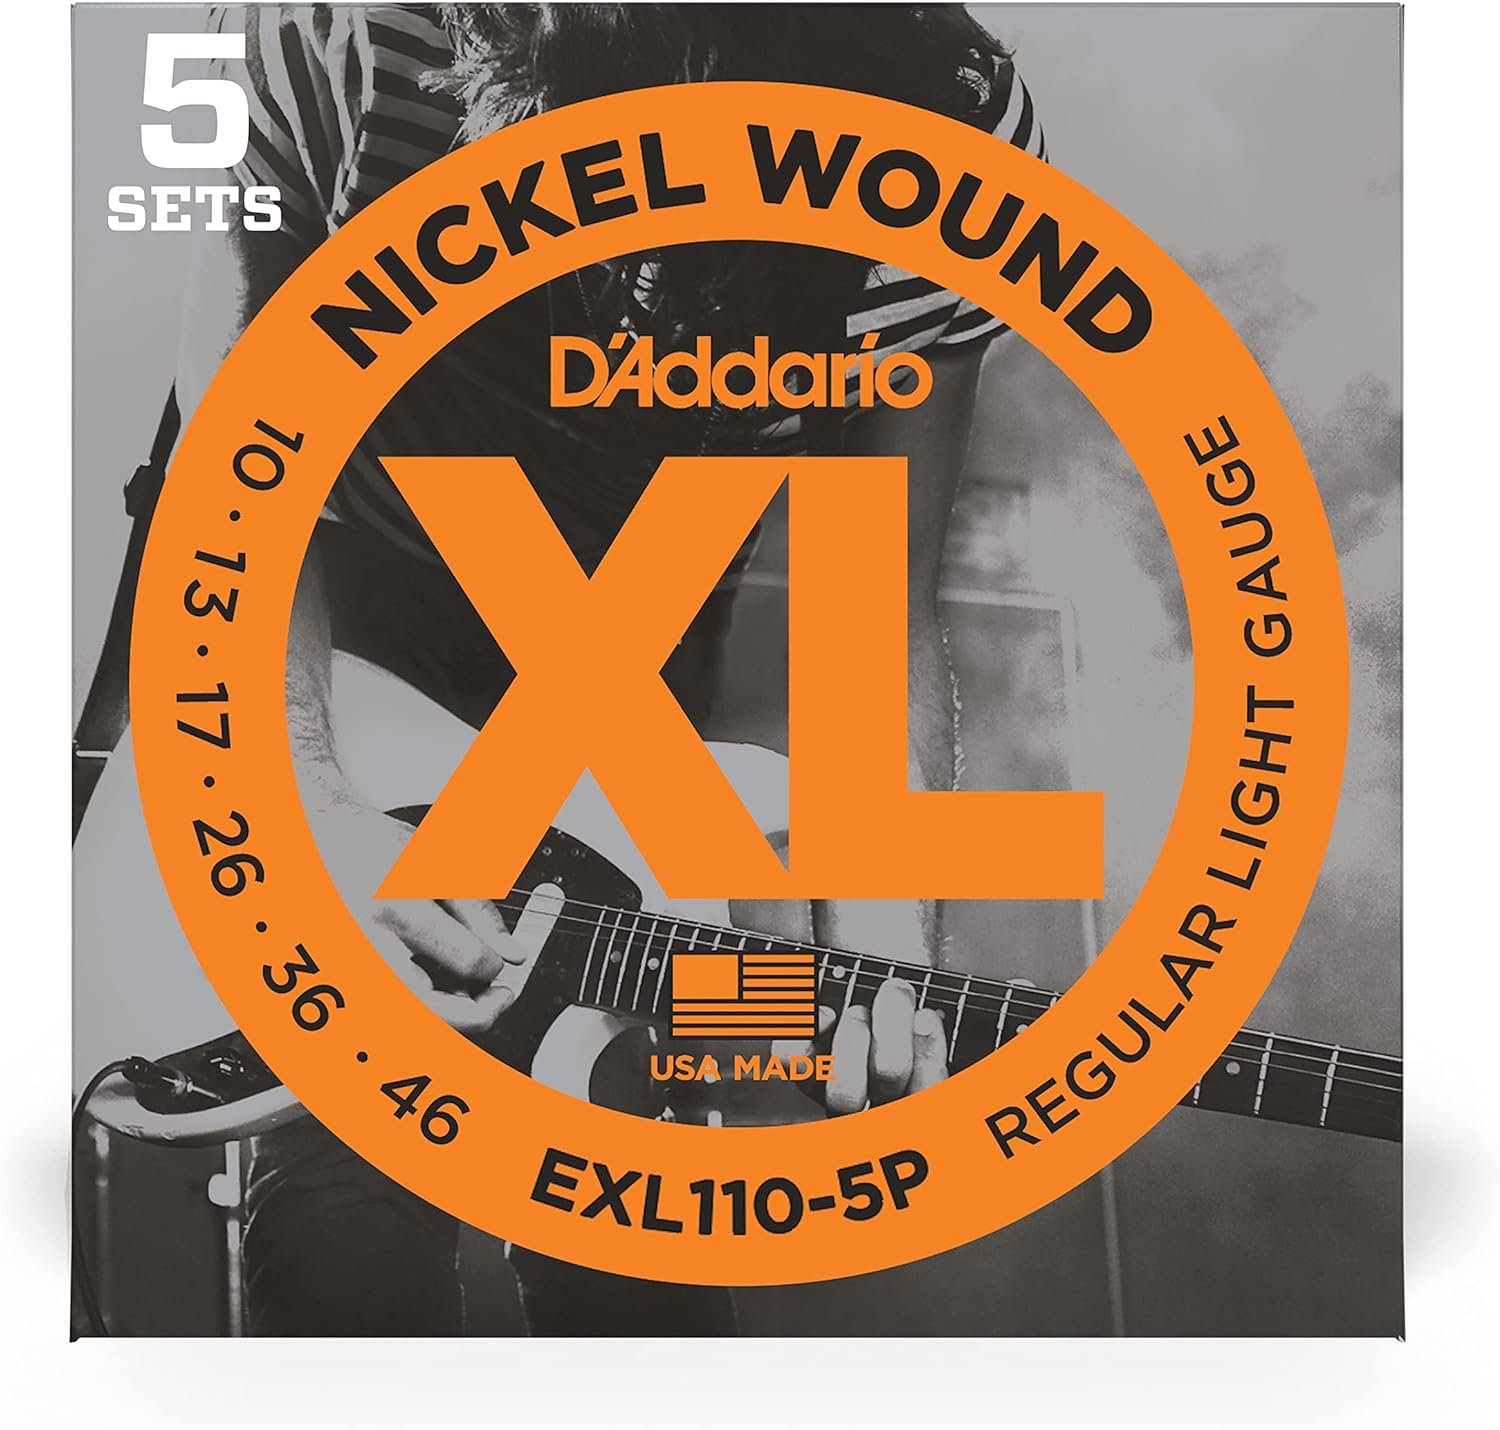 DAddario Guitar Strings - XL Nickel Electric Guitar Strings - EXL110-5P - Perfect Intonation, Consistent Feel, Reliable Durability - For 6 String Guitars - 10-46 Regular Light, 5-Pack